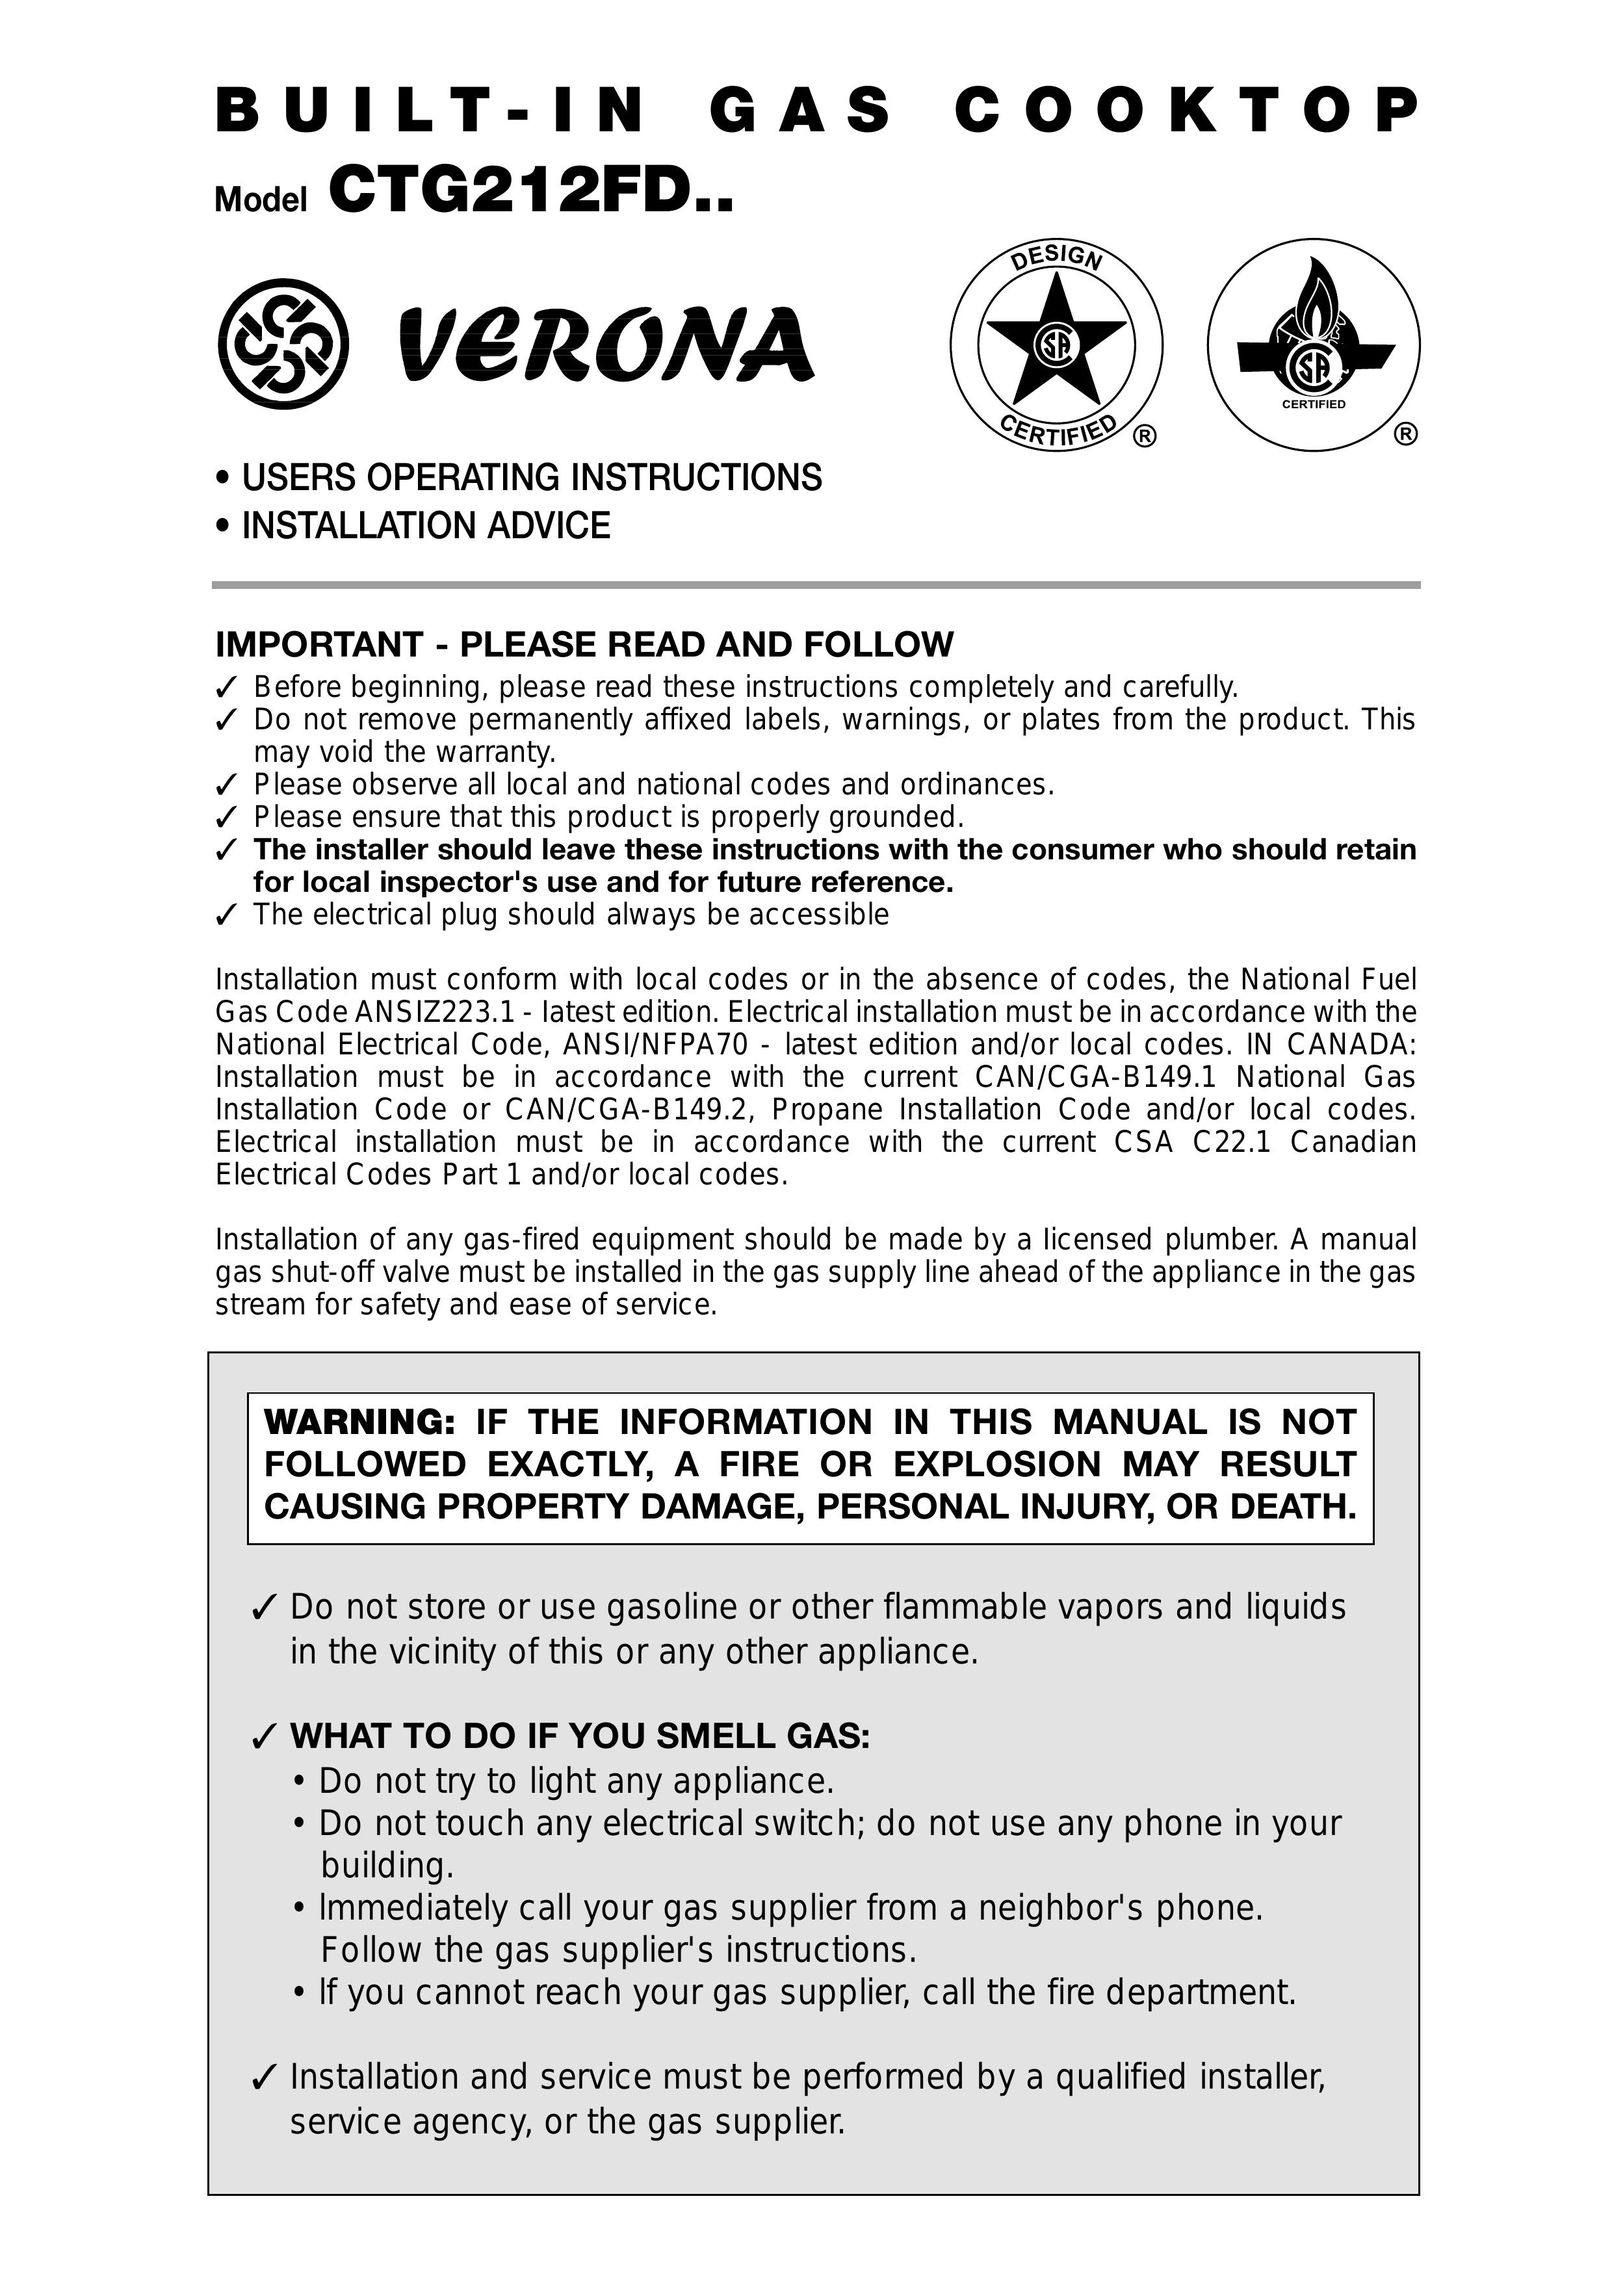 Verona CTG212FD Cooktop User Manual